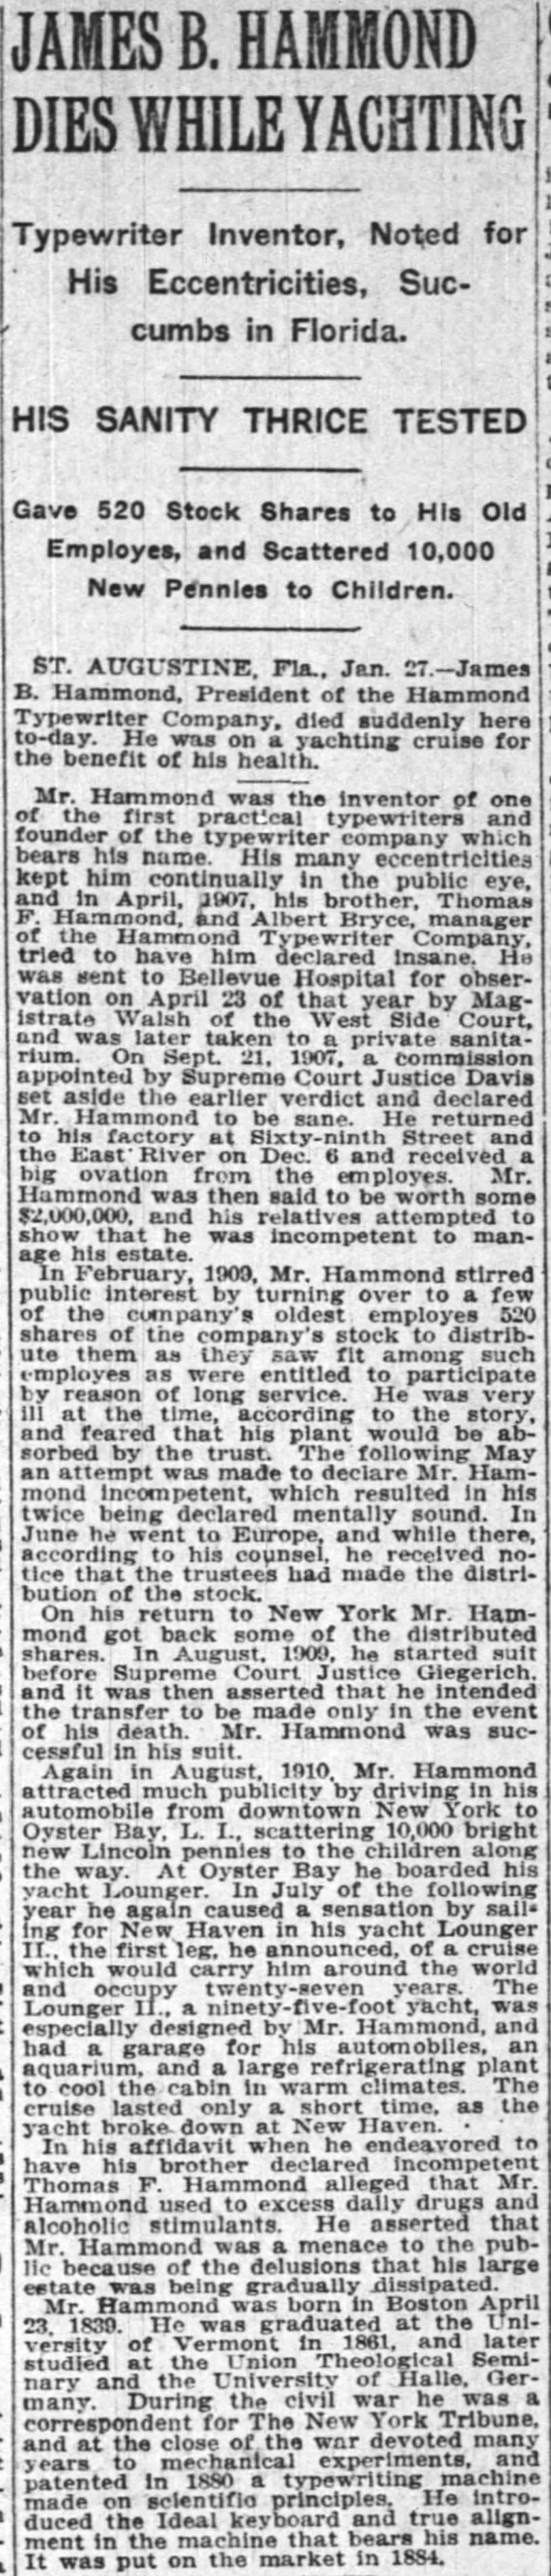 James B. Hammond Dies While Yachting